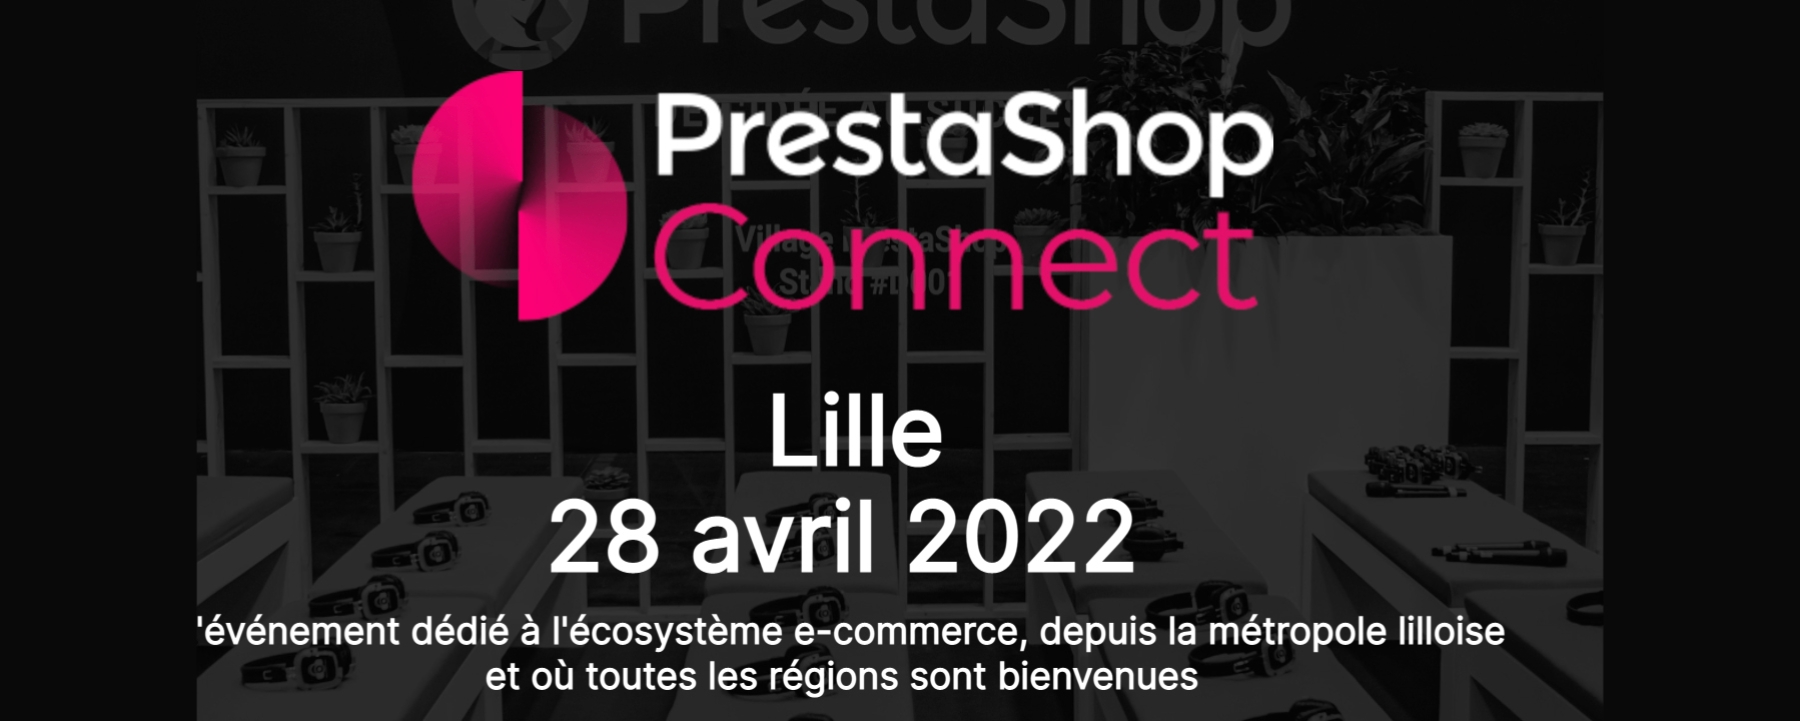 PrestaShop Connect Lille – By Prestashop